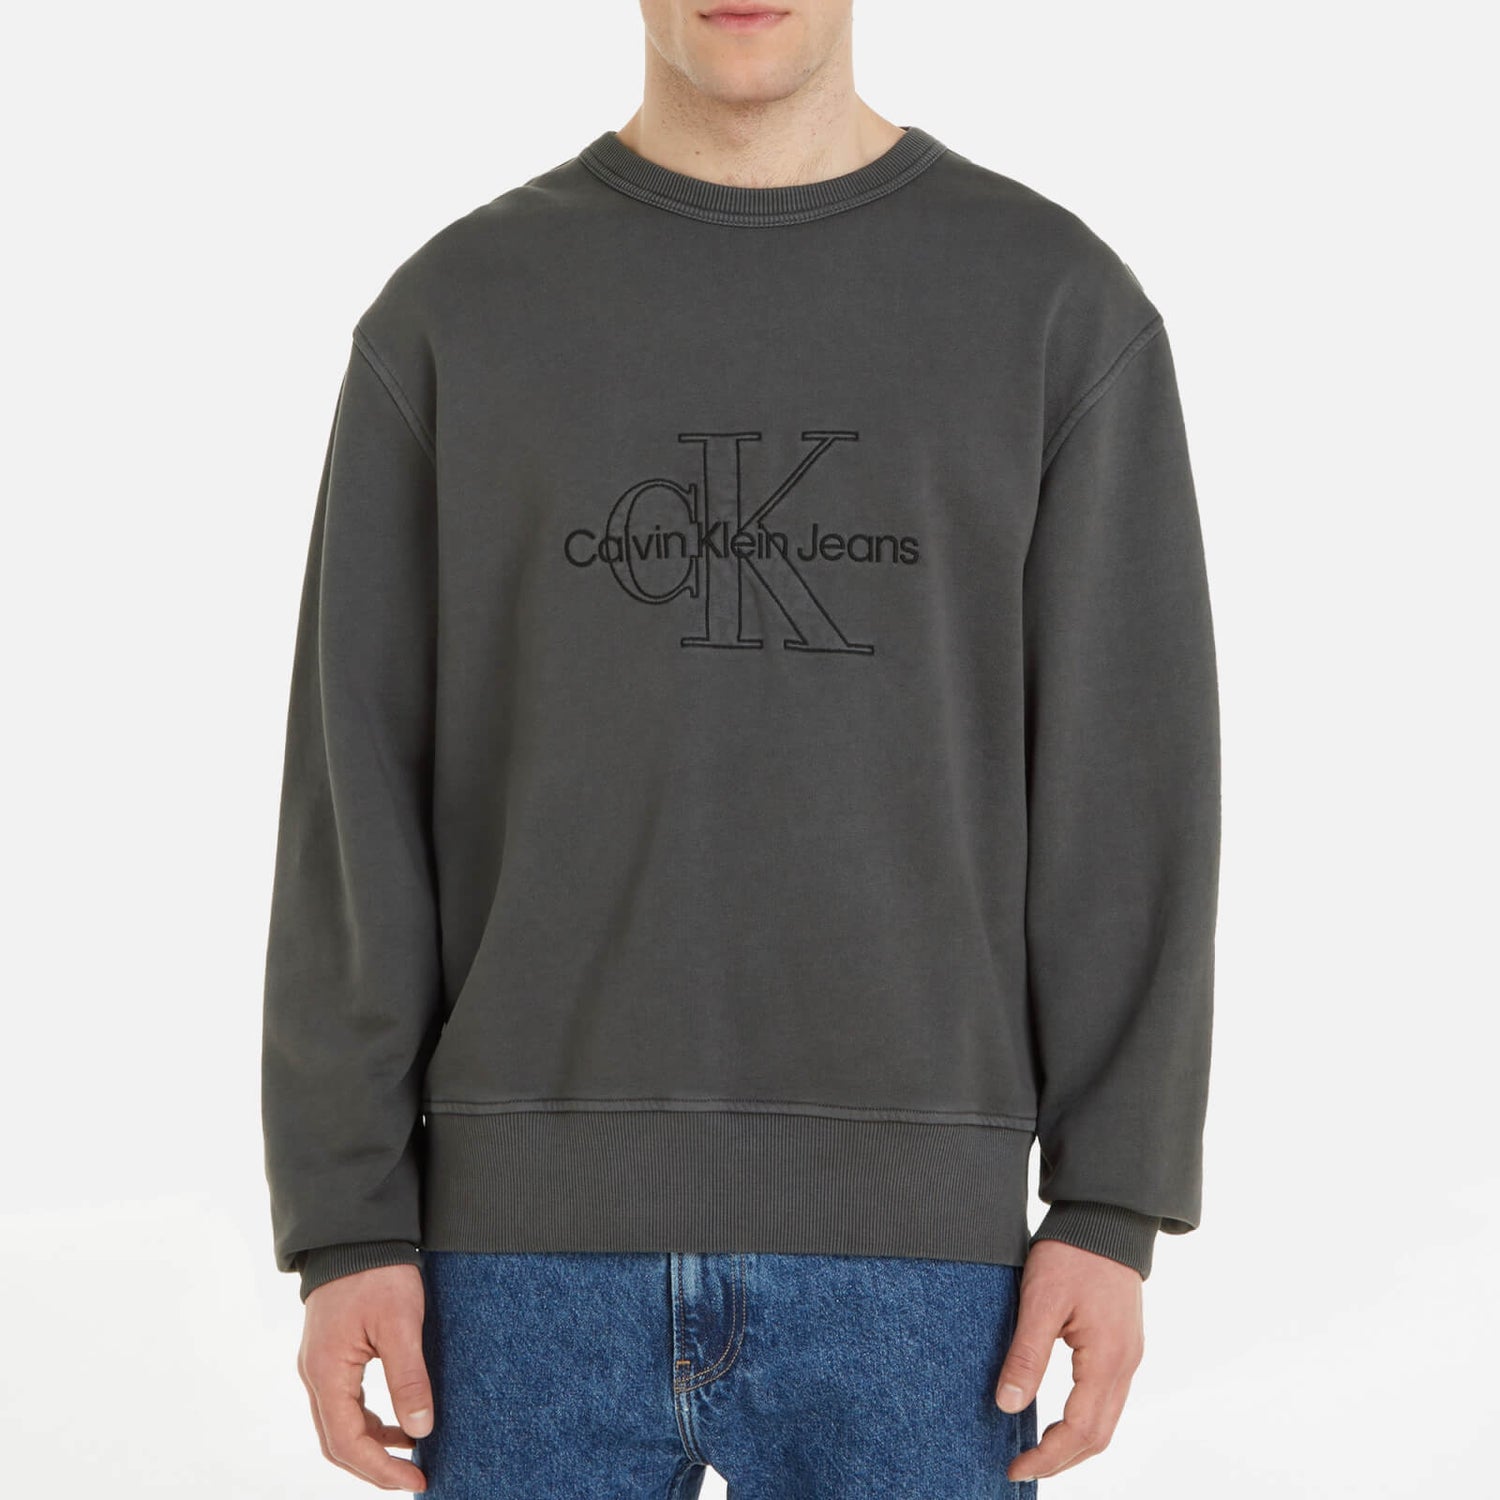 Calvin Klein Jeans Monologo Cotton Sweatshirt - S